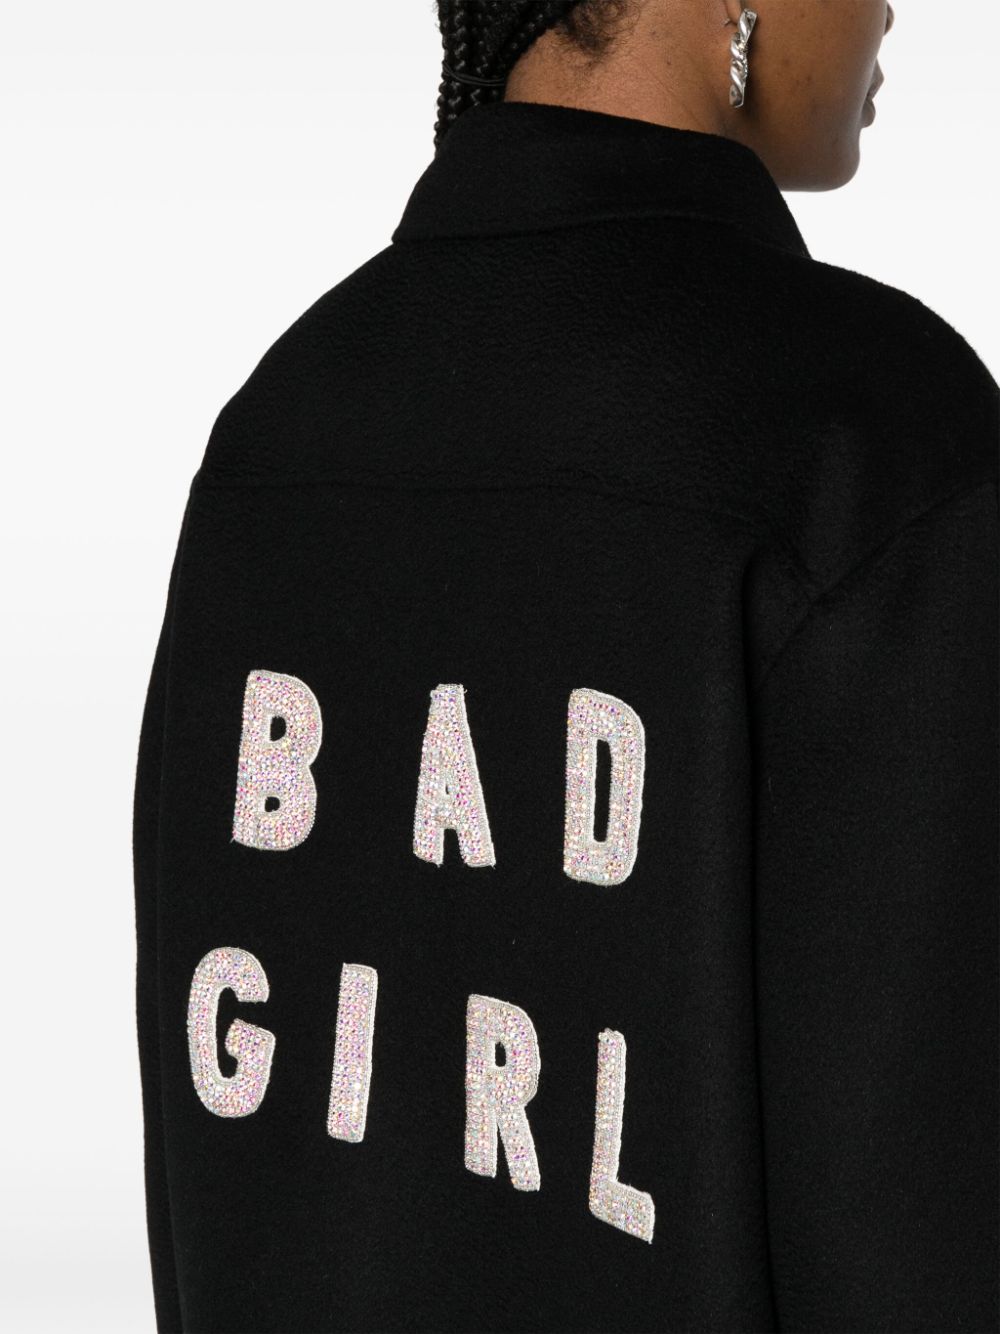 Bad Girl Blck Jacket